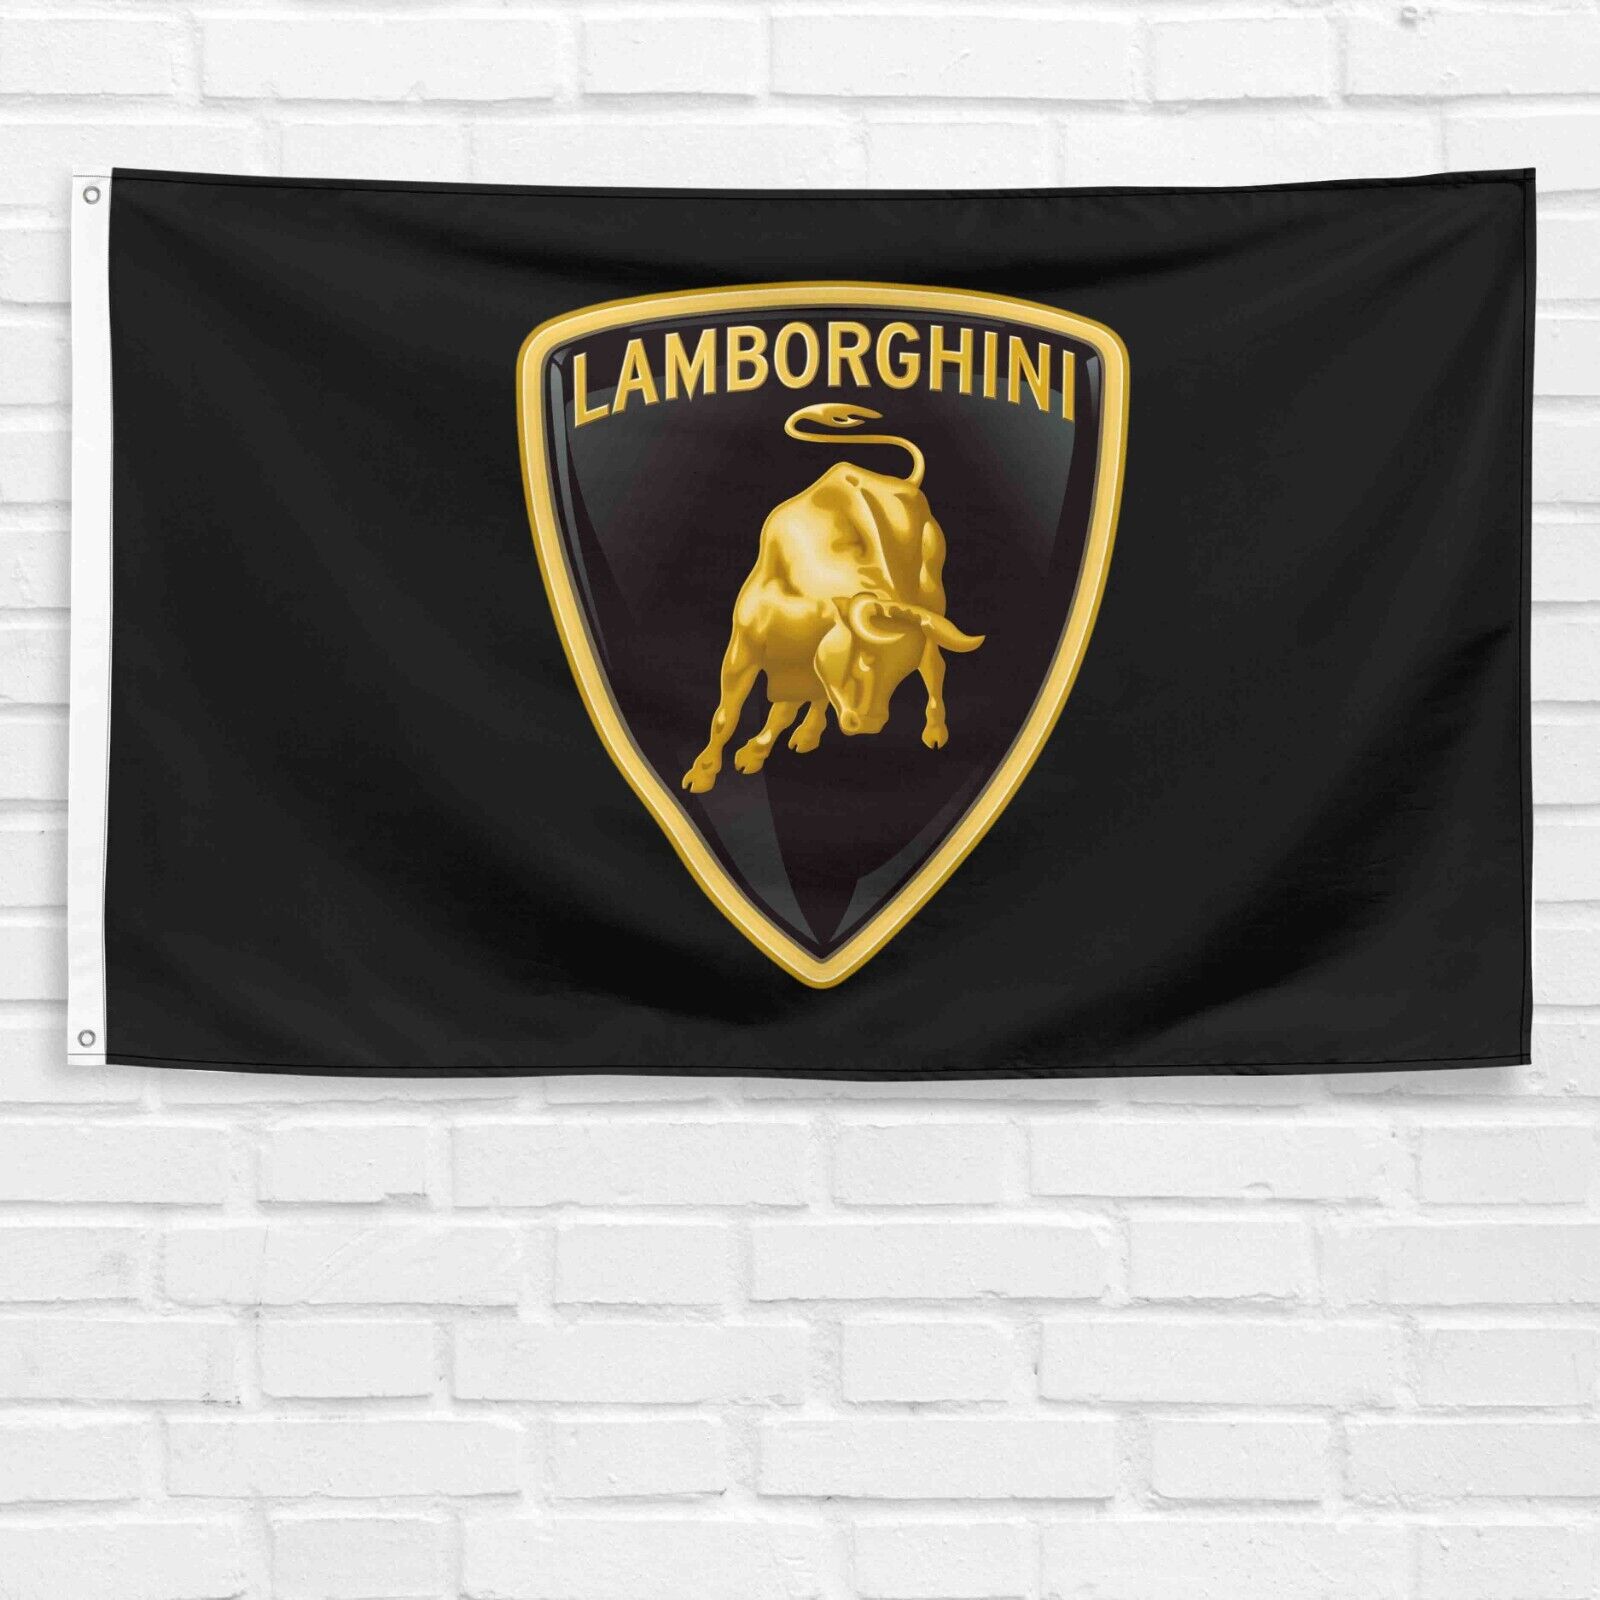 For Lamborghini 3x5 ft Banner Car Truck Racing Show Garage Wall Sign Flag